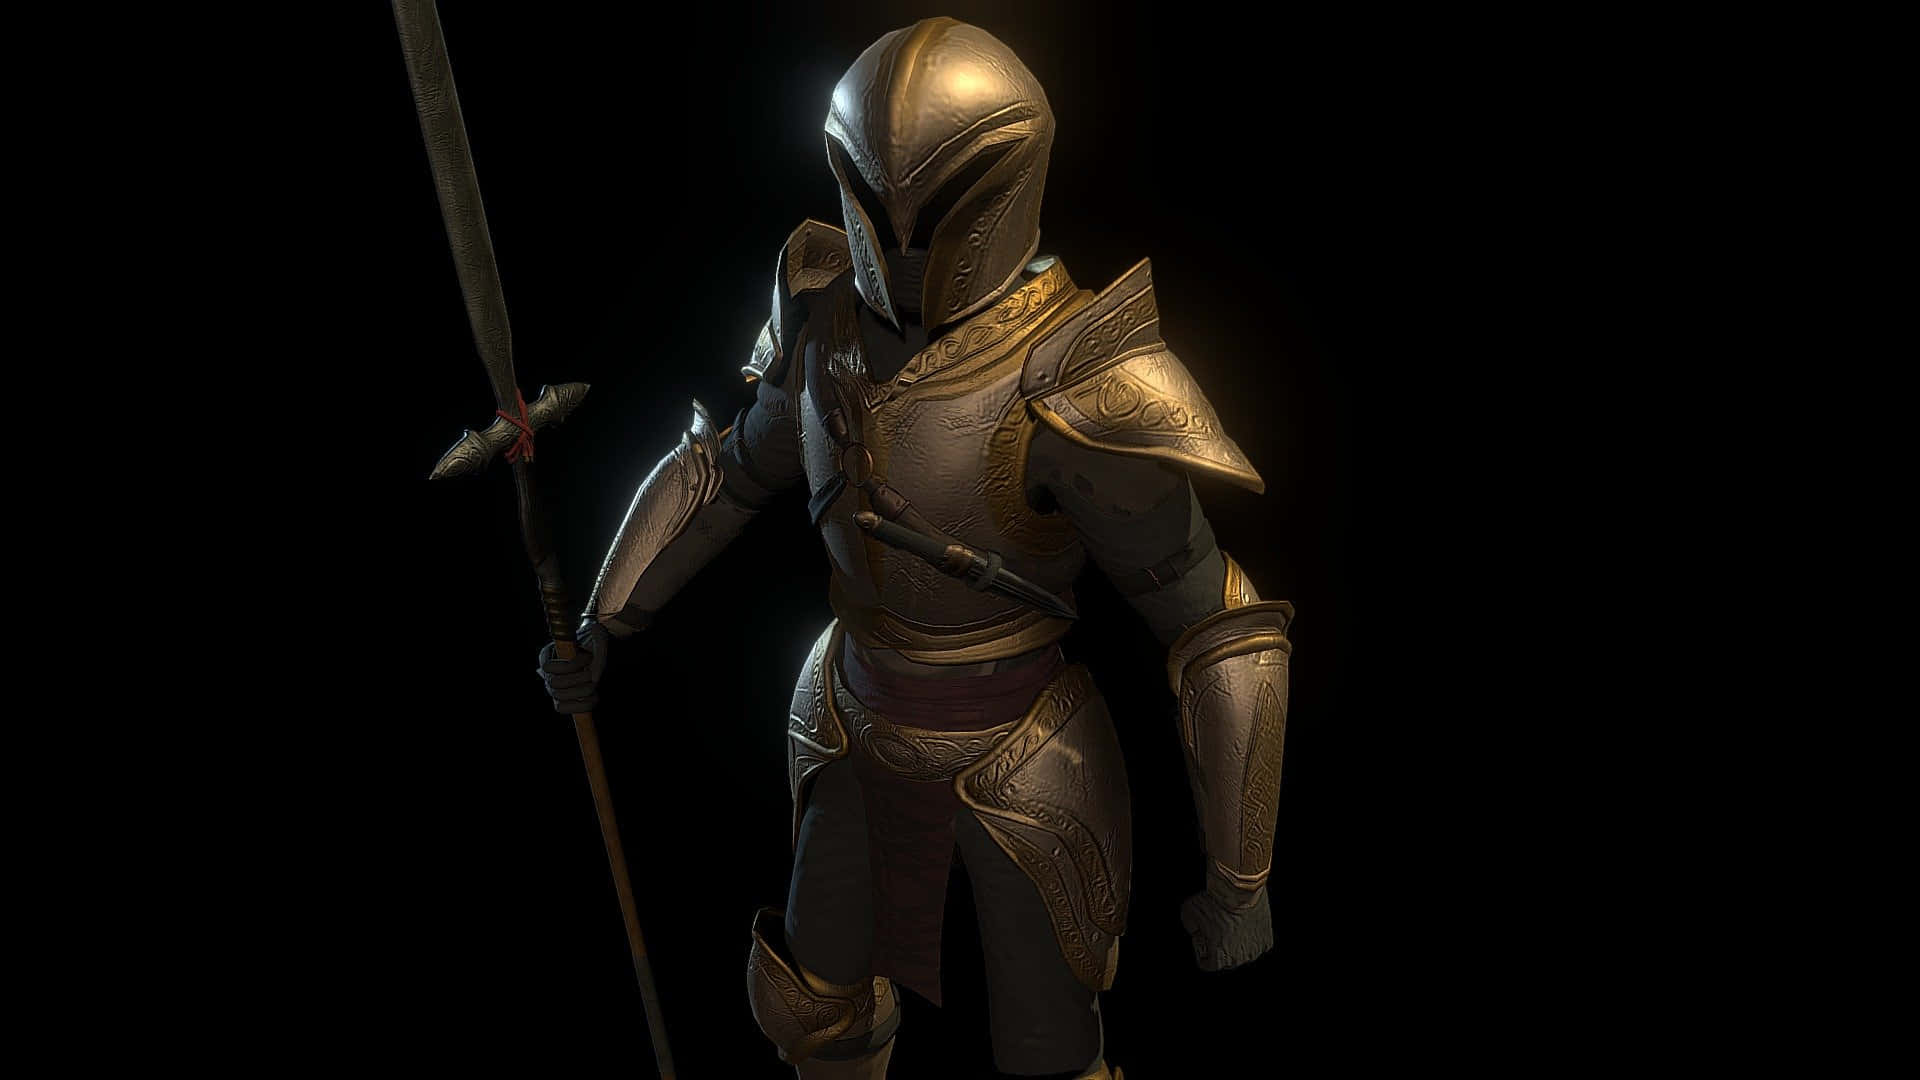 Best Mordhau Background Unique Knight Armor